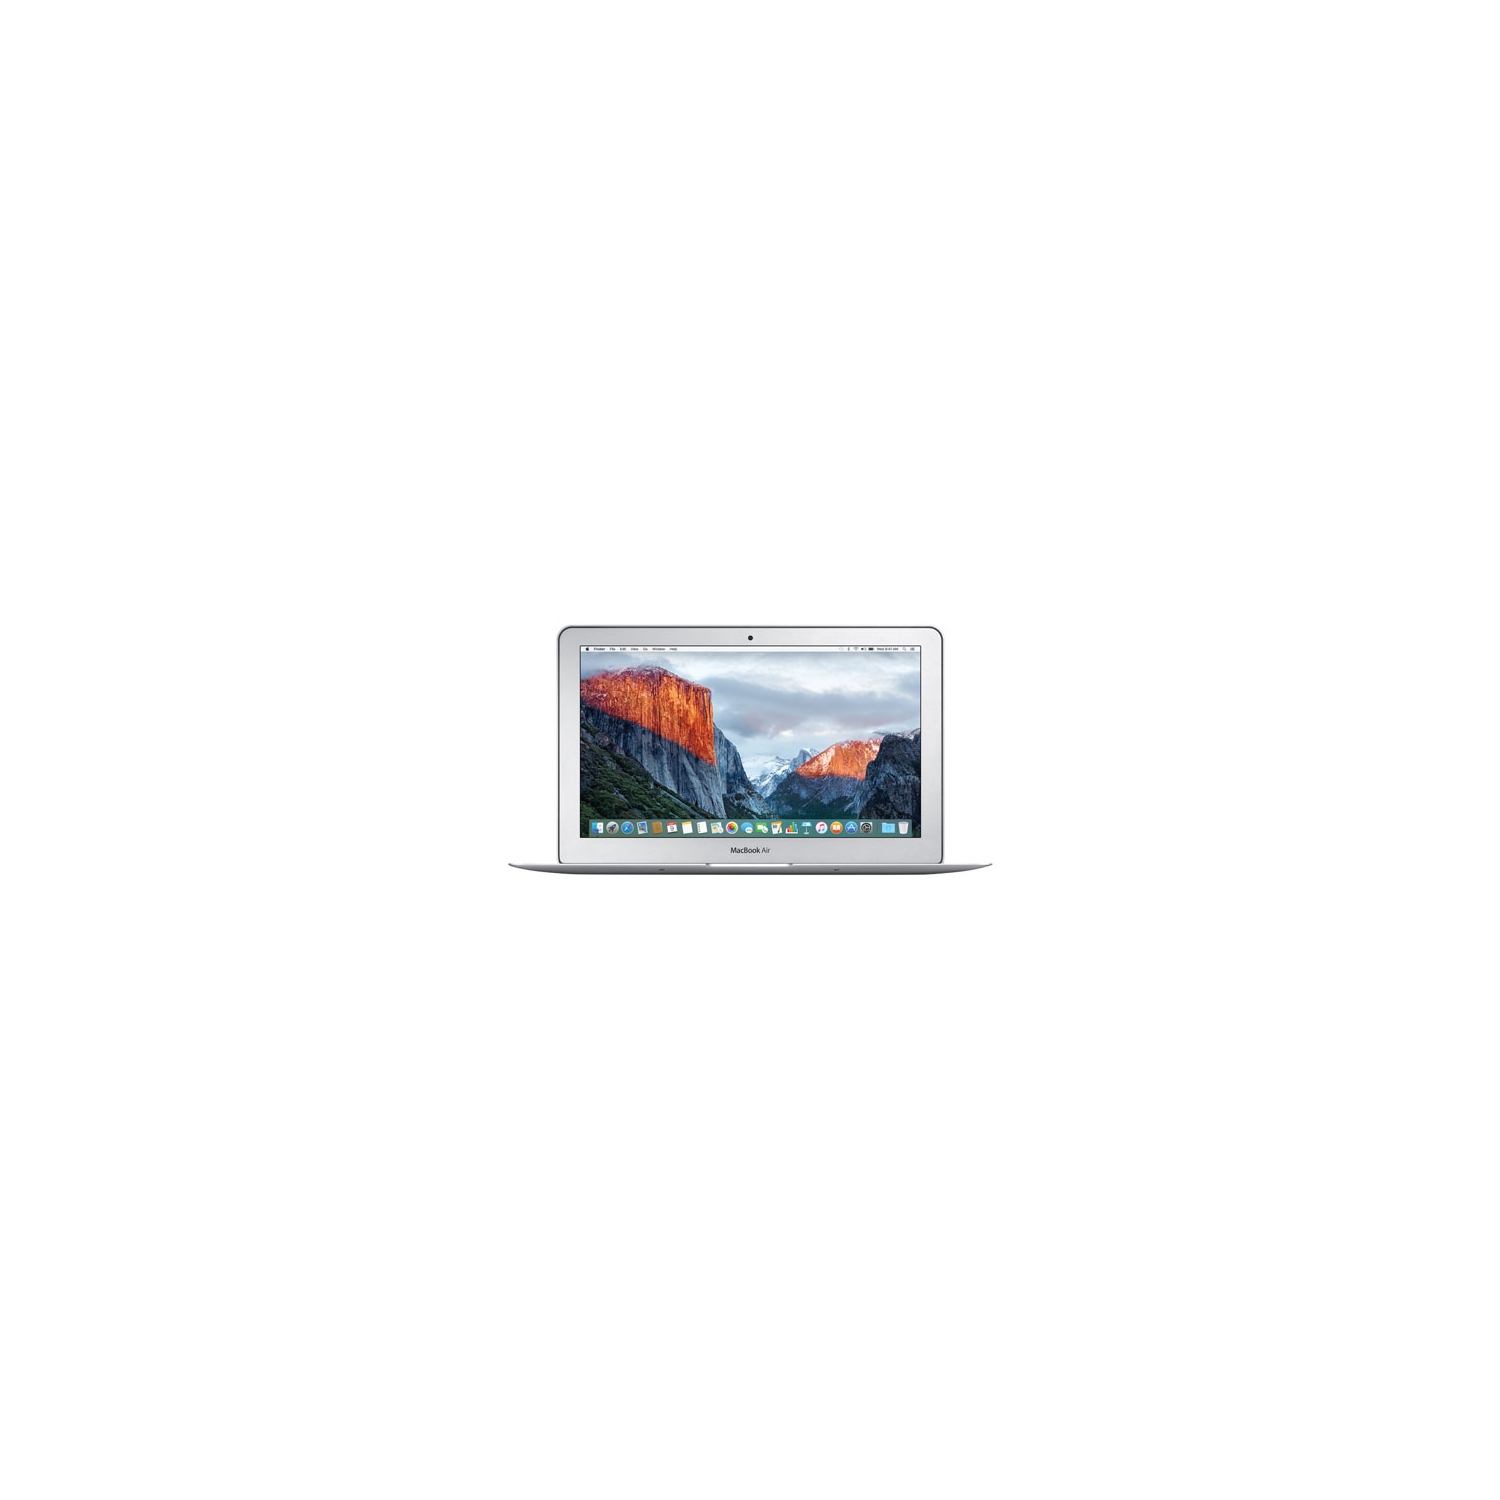 Refurbished (Good) - Apple MacBook Air 11" (2015) Dual-Core Intel Core i5 1.6GHz Laptop - English